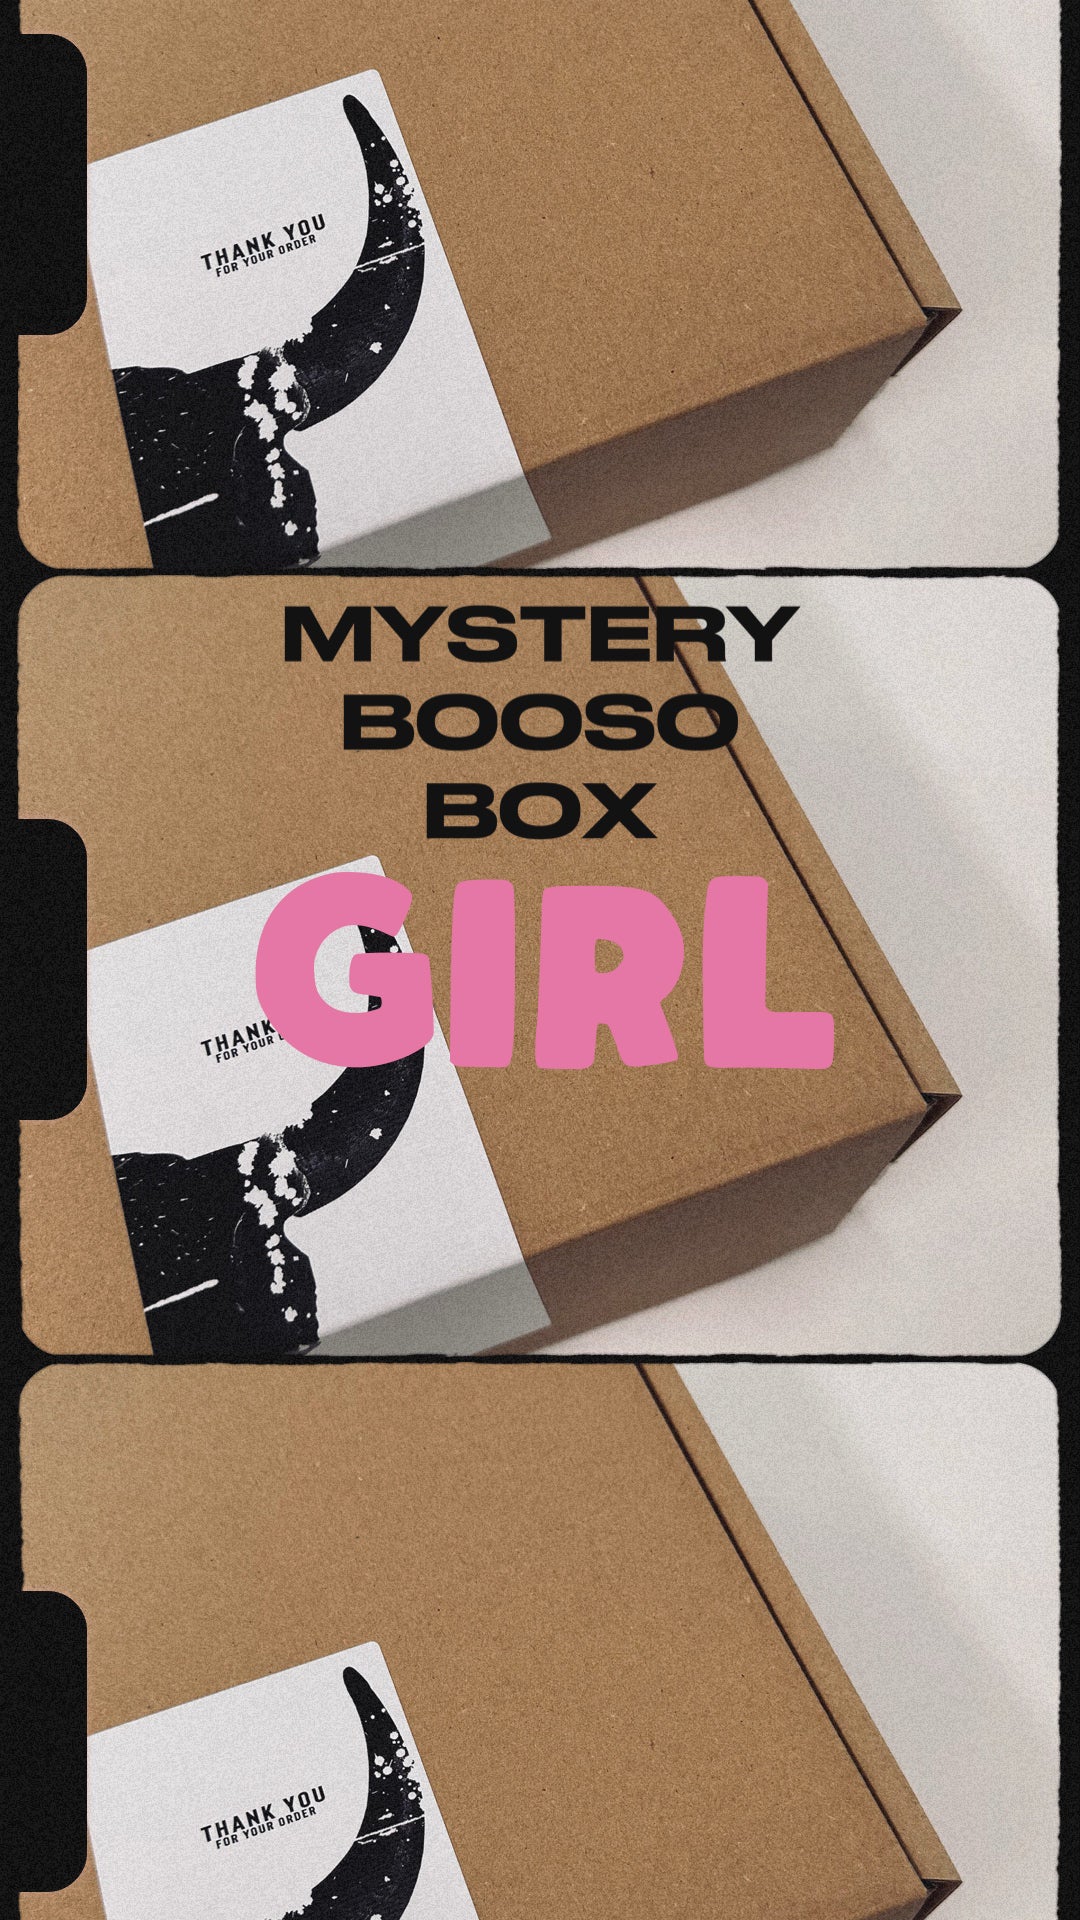 MYSTERY BOOSO BOX girl